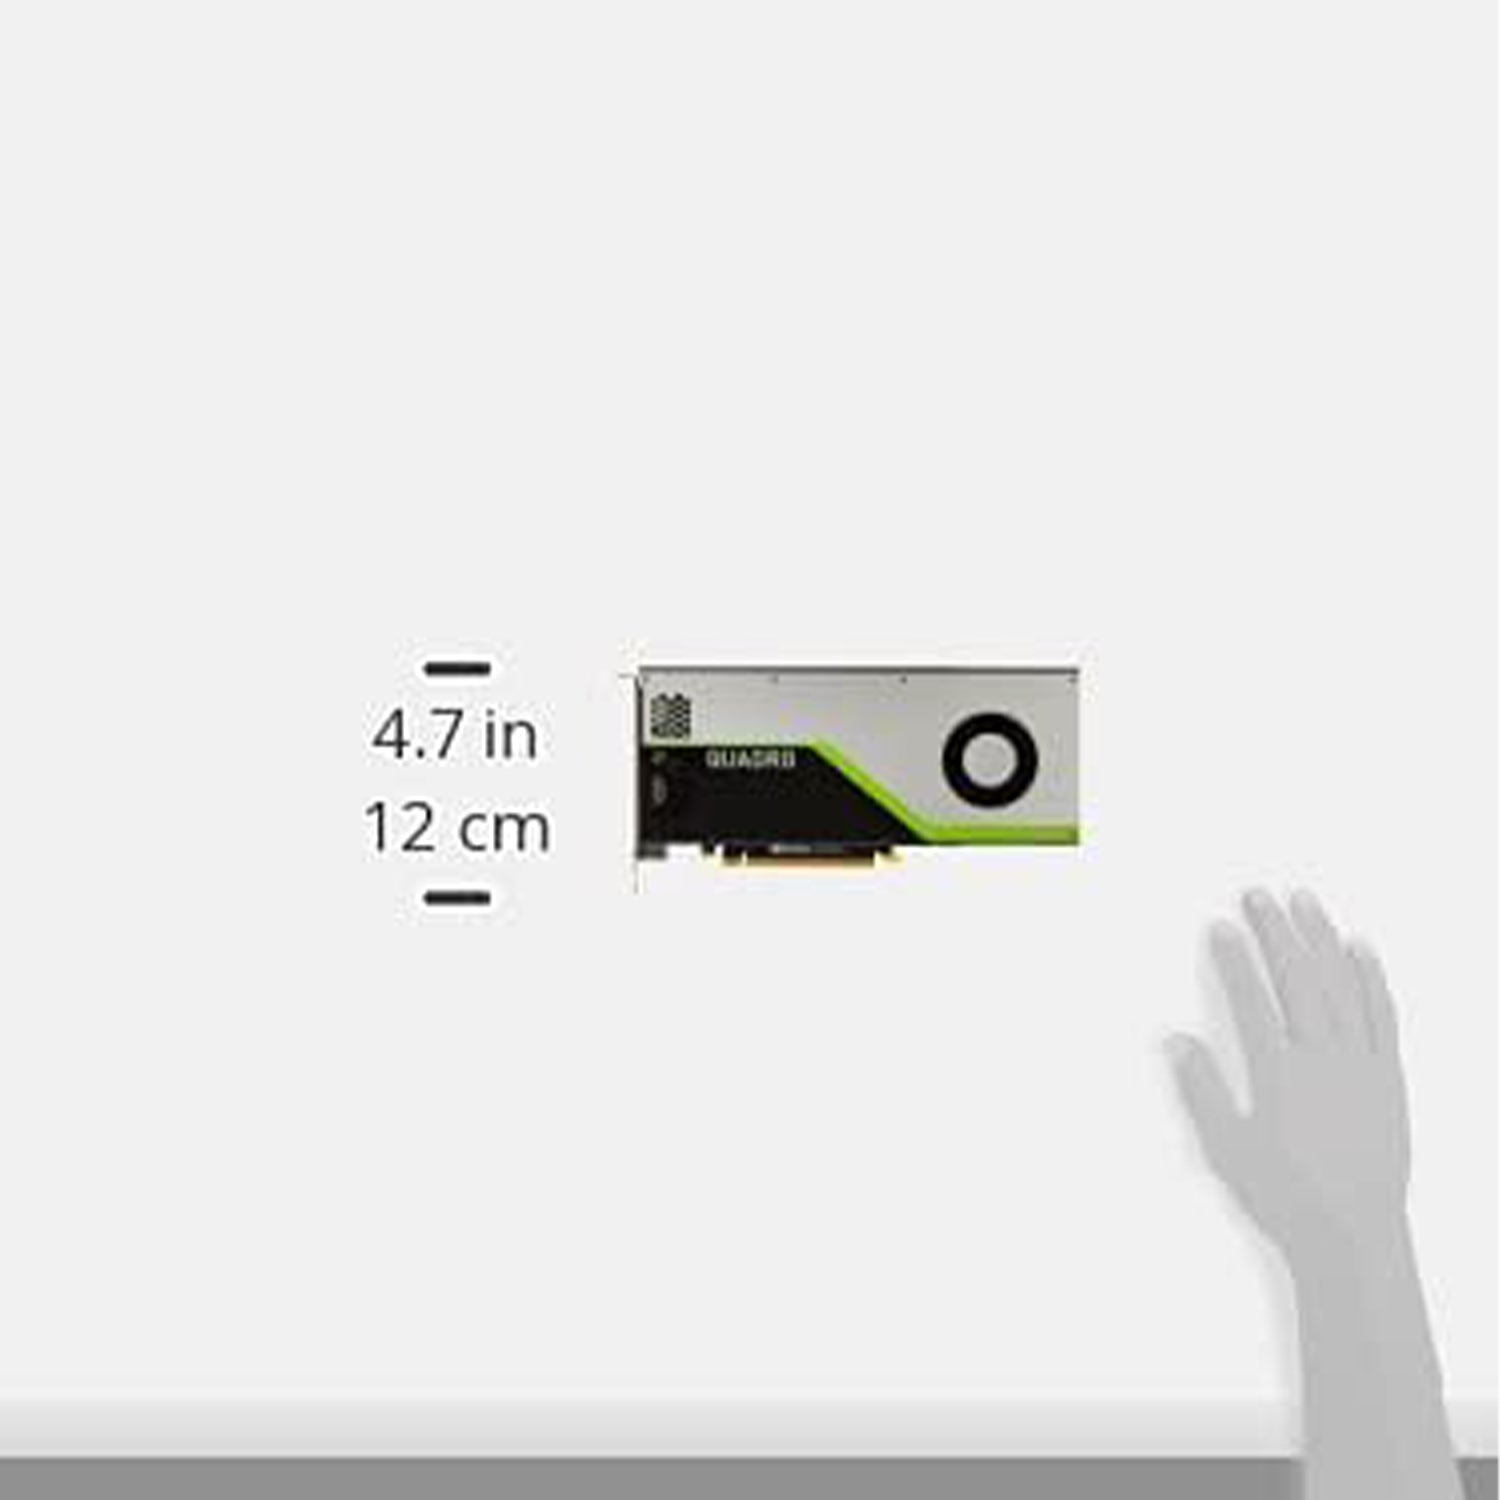 NVIDIA Quadro RTX 4000, 8GB GDDR6 - Video Card, 3 x Display Ports, USB - C Port Graphics Card for Workstation - Refurbished